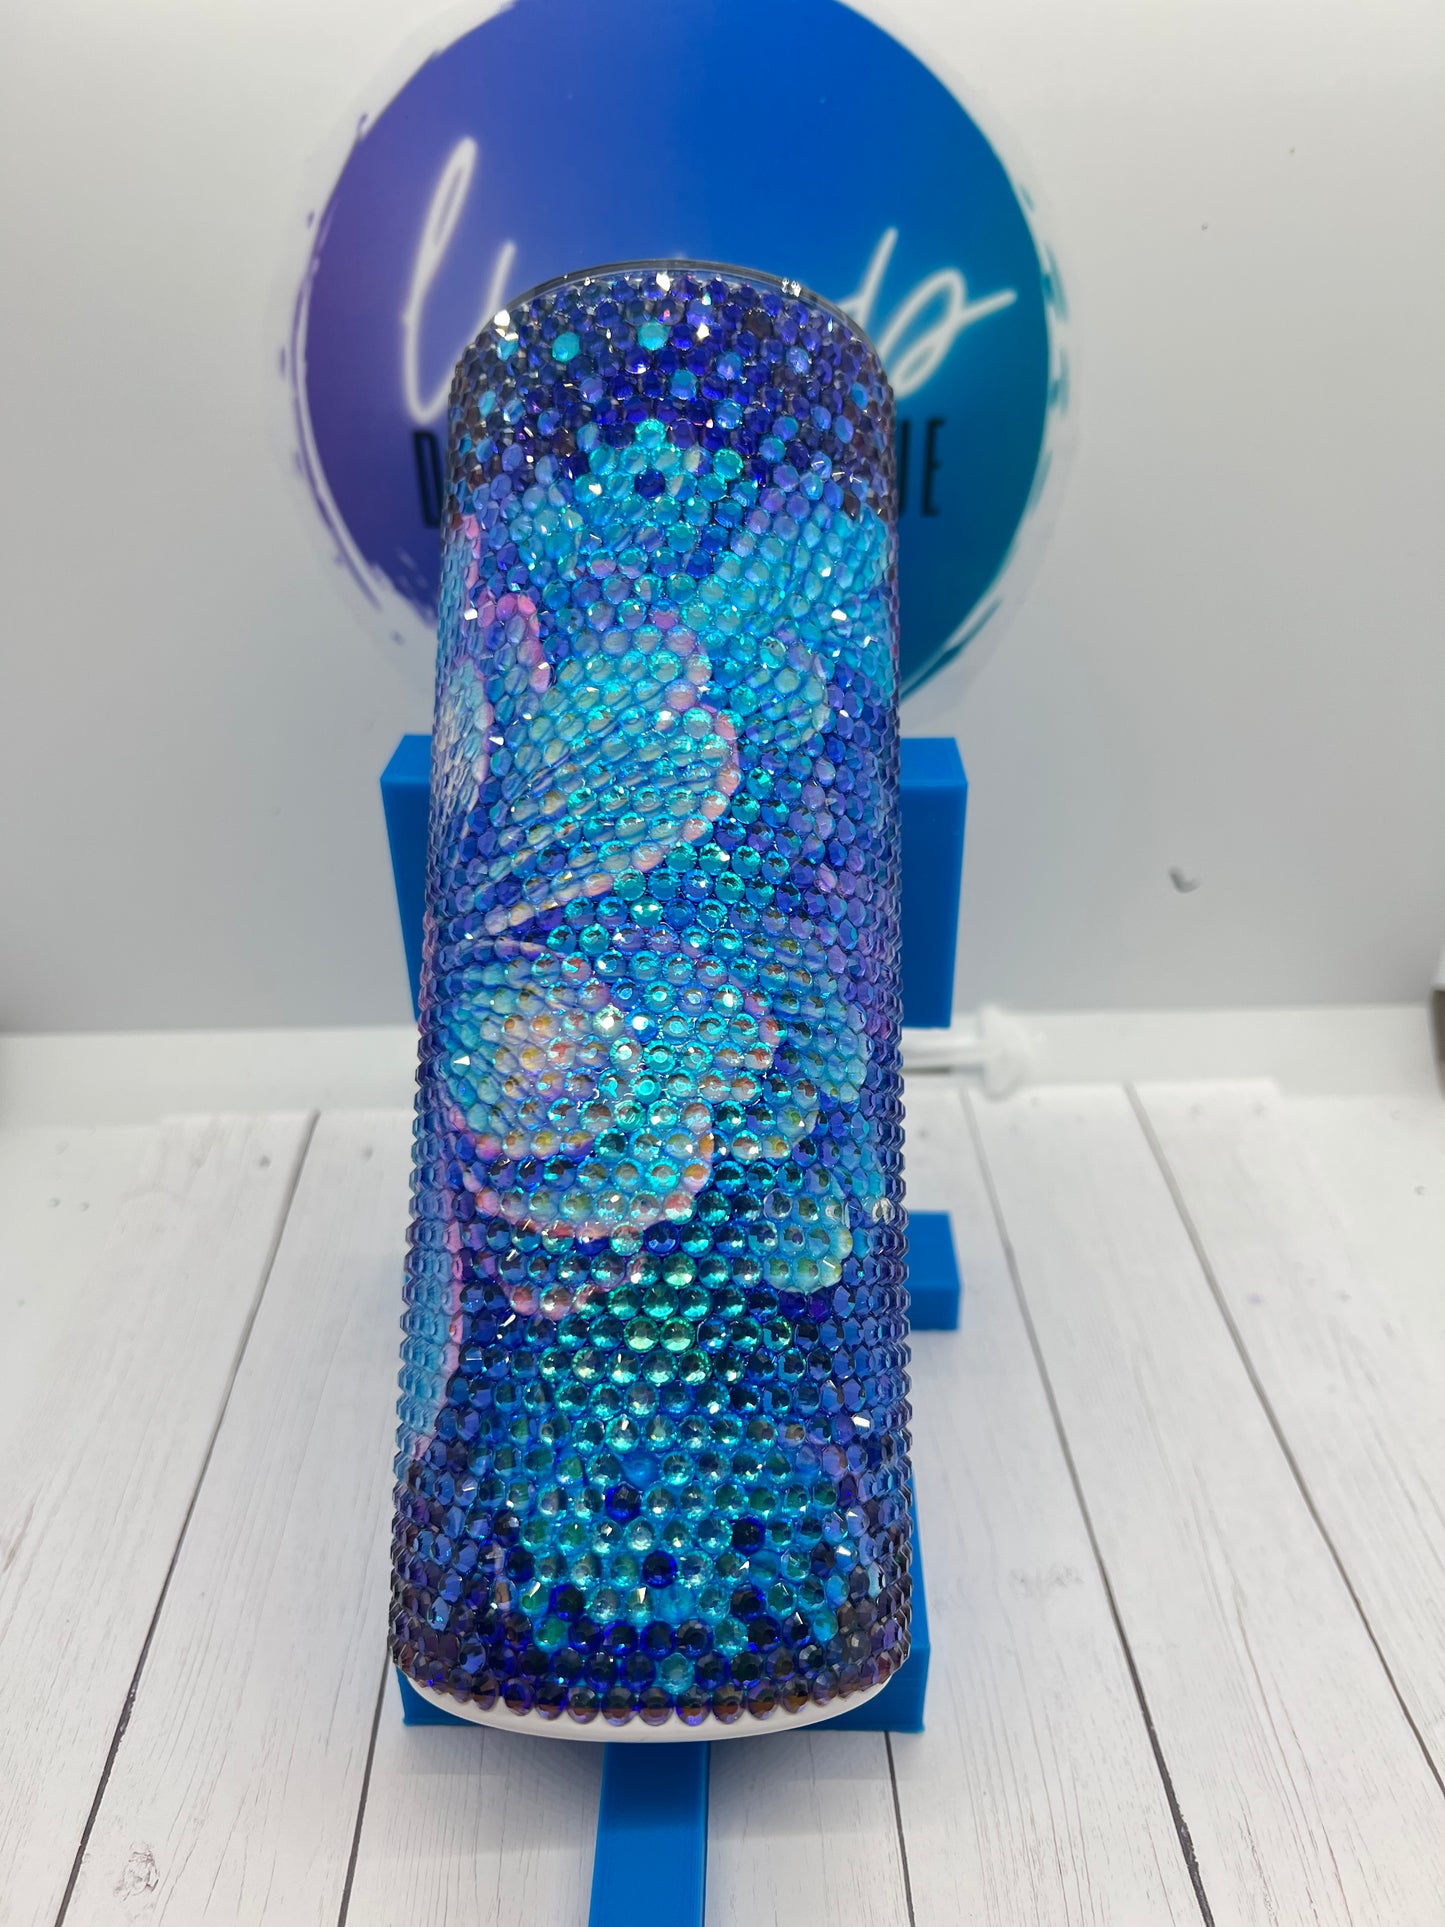 Neon blue flower - 20 oz glass